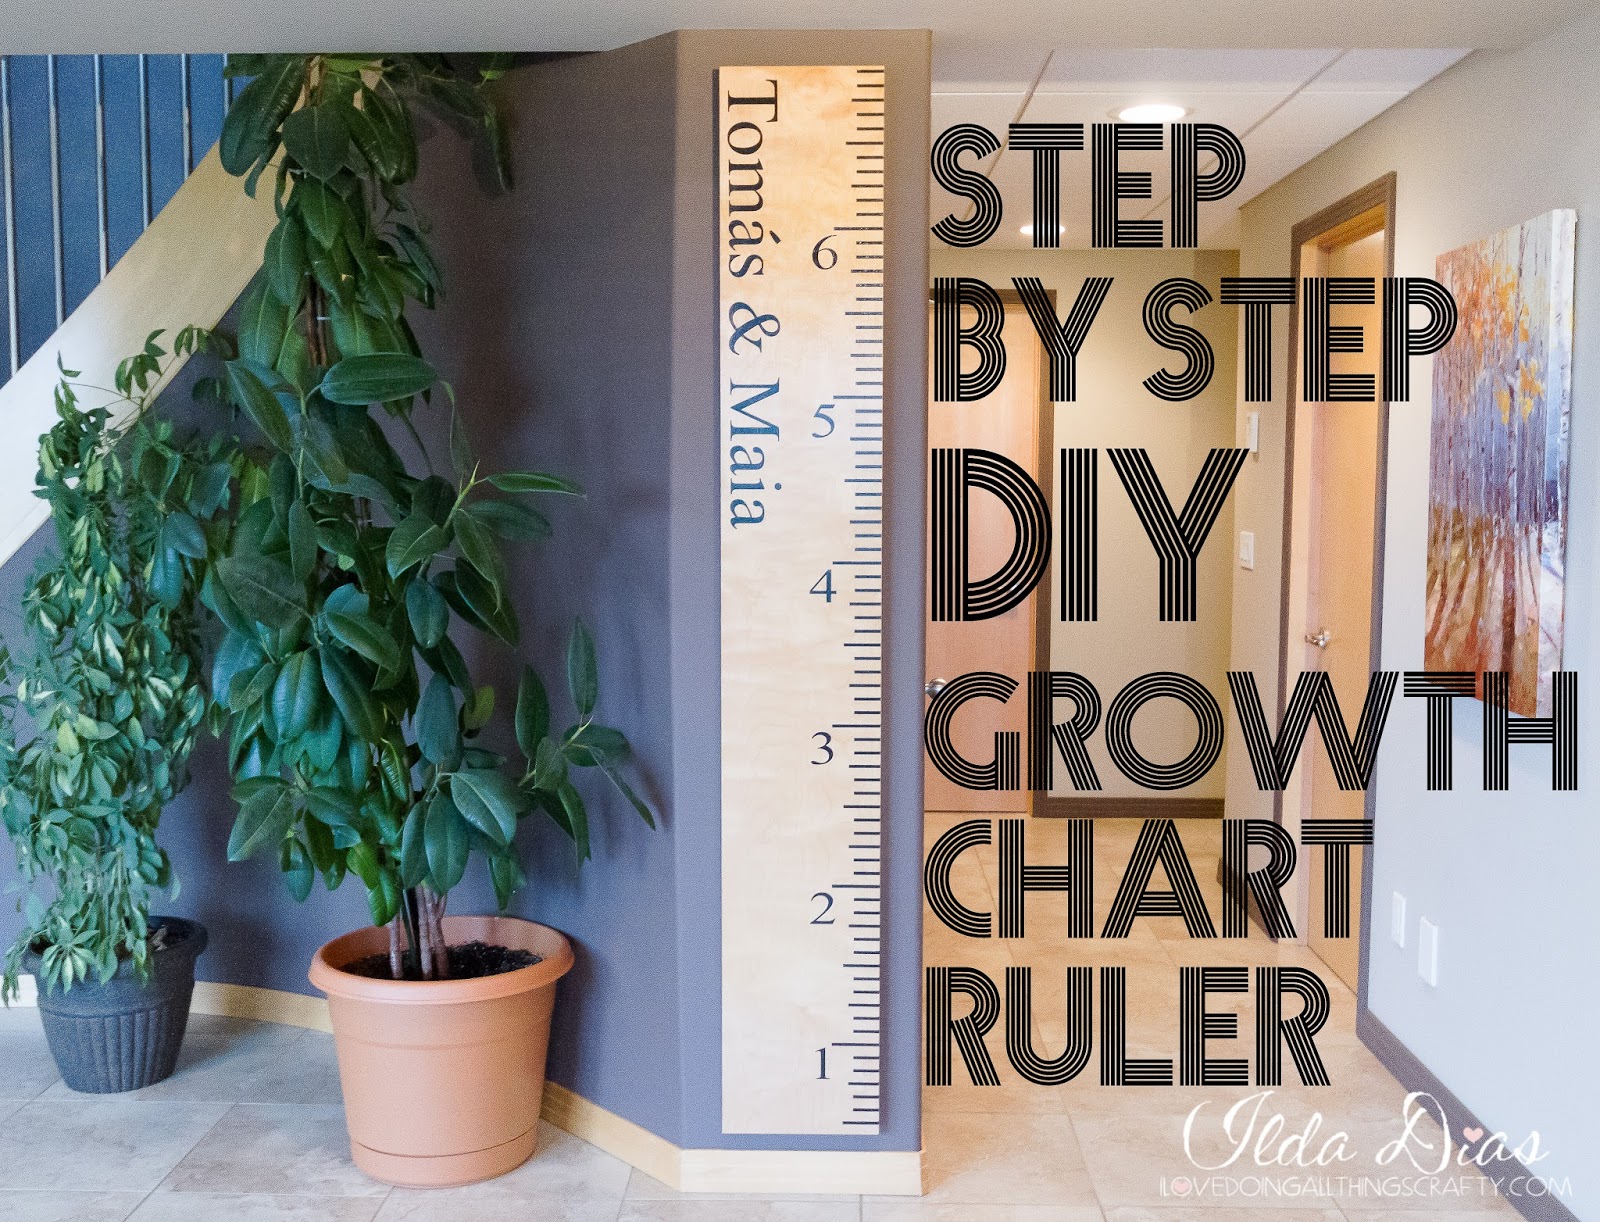 Make A Growth Chart